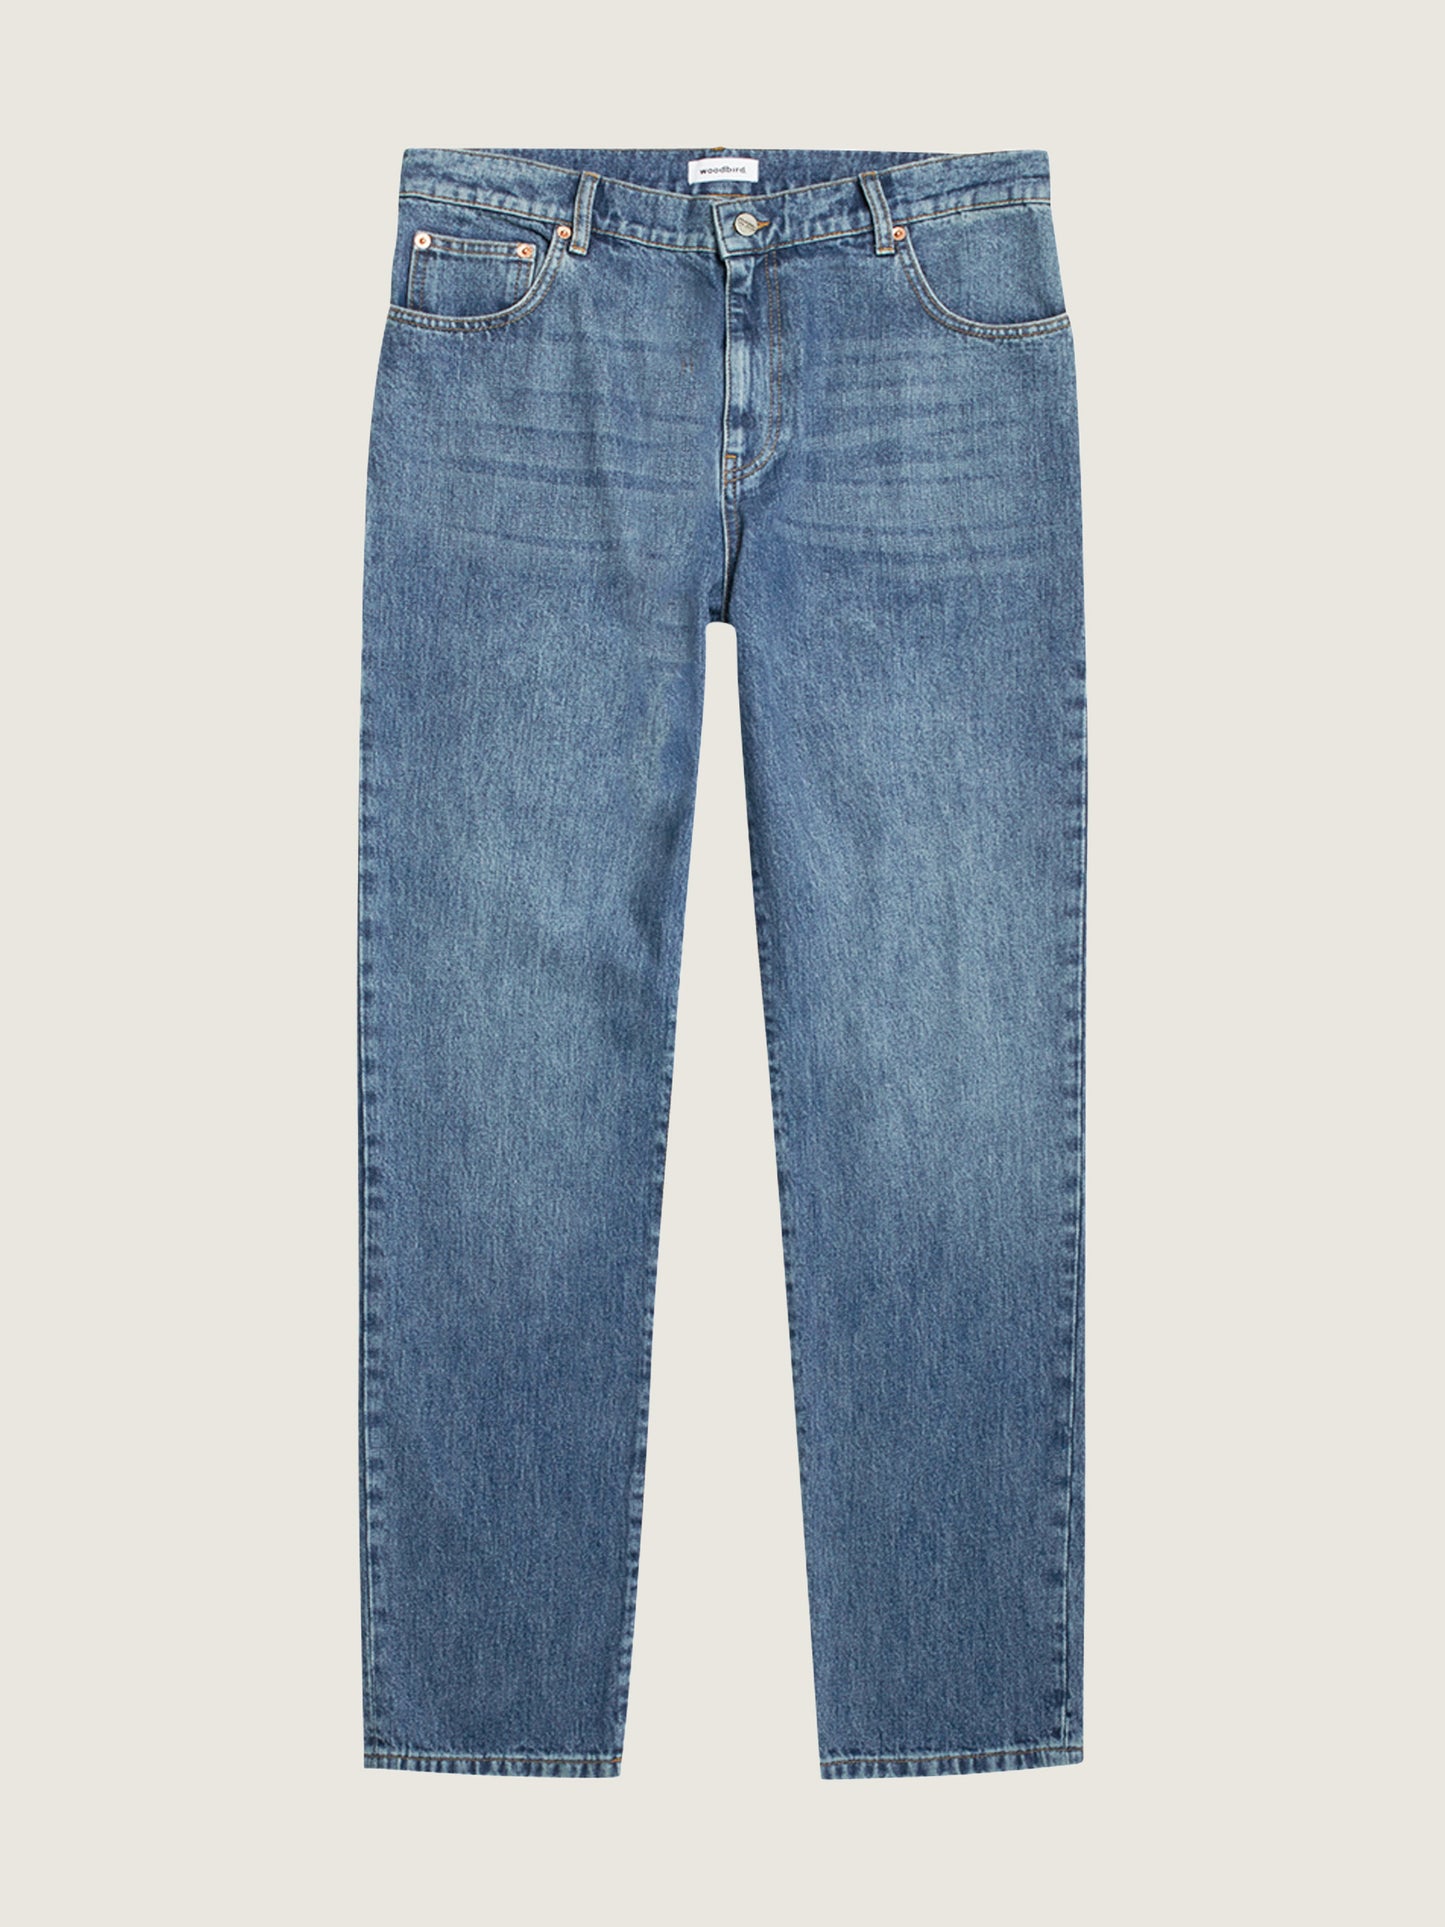 Woodbird Leroy Blue Vintage Jeans Jeans Light Blue